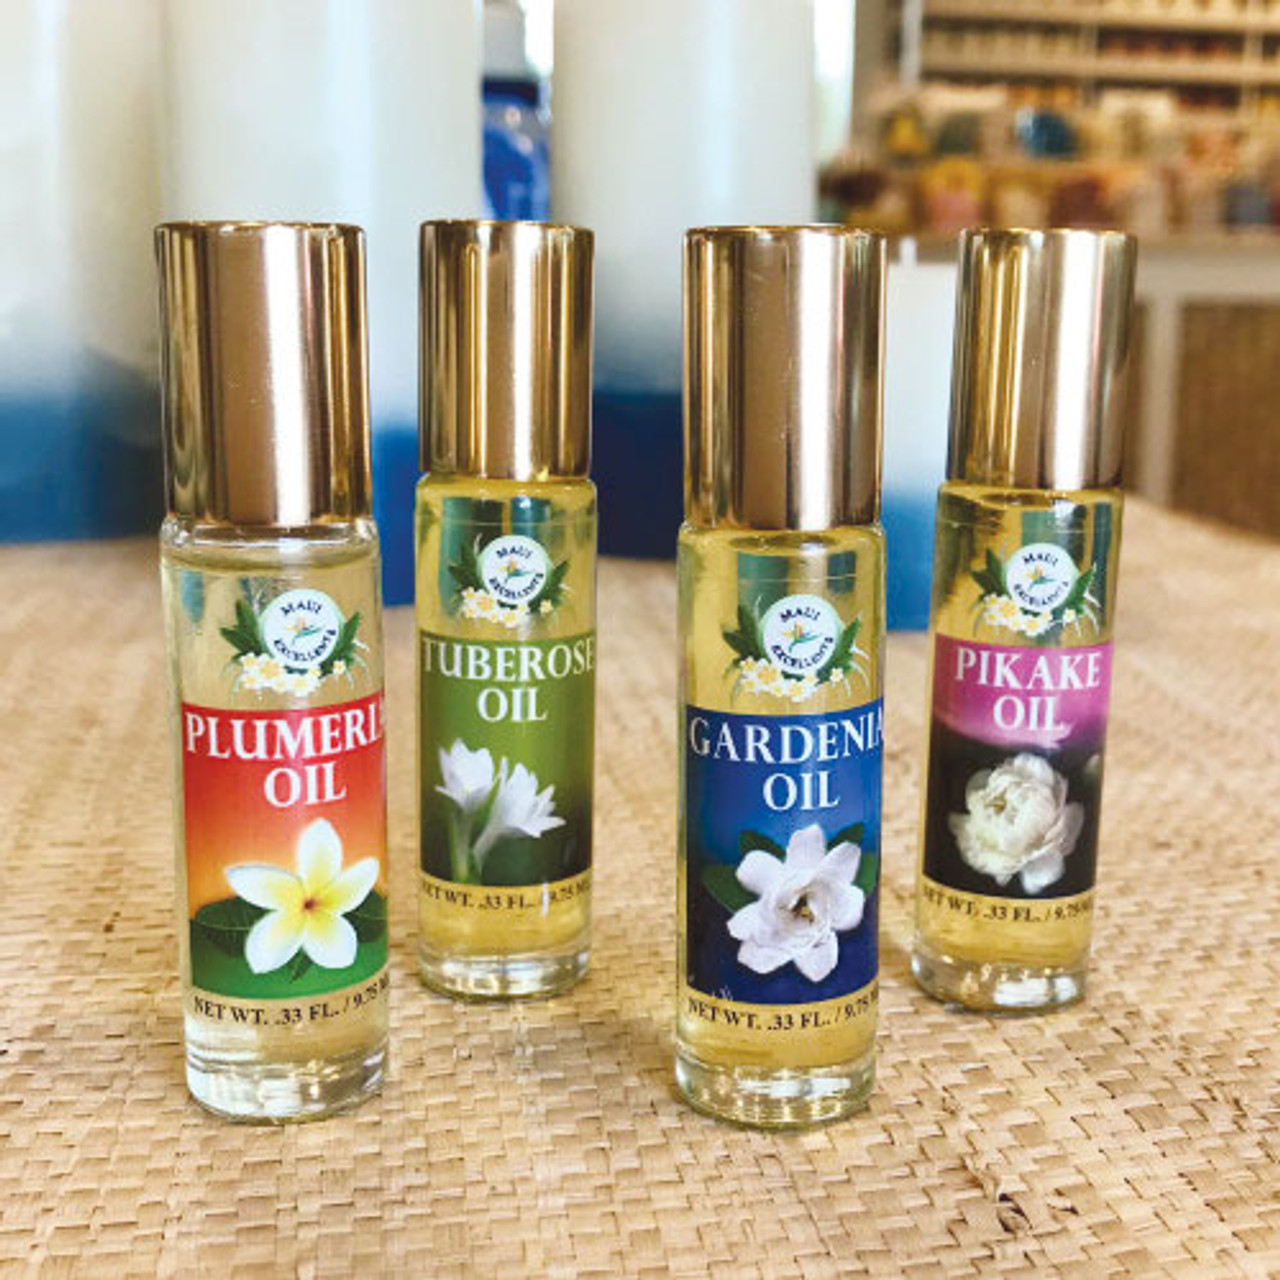 Perfume Oils - Island Soap & Candle Works